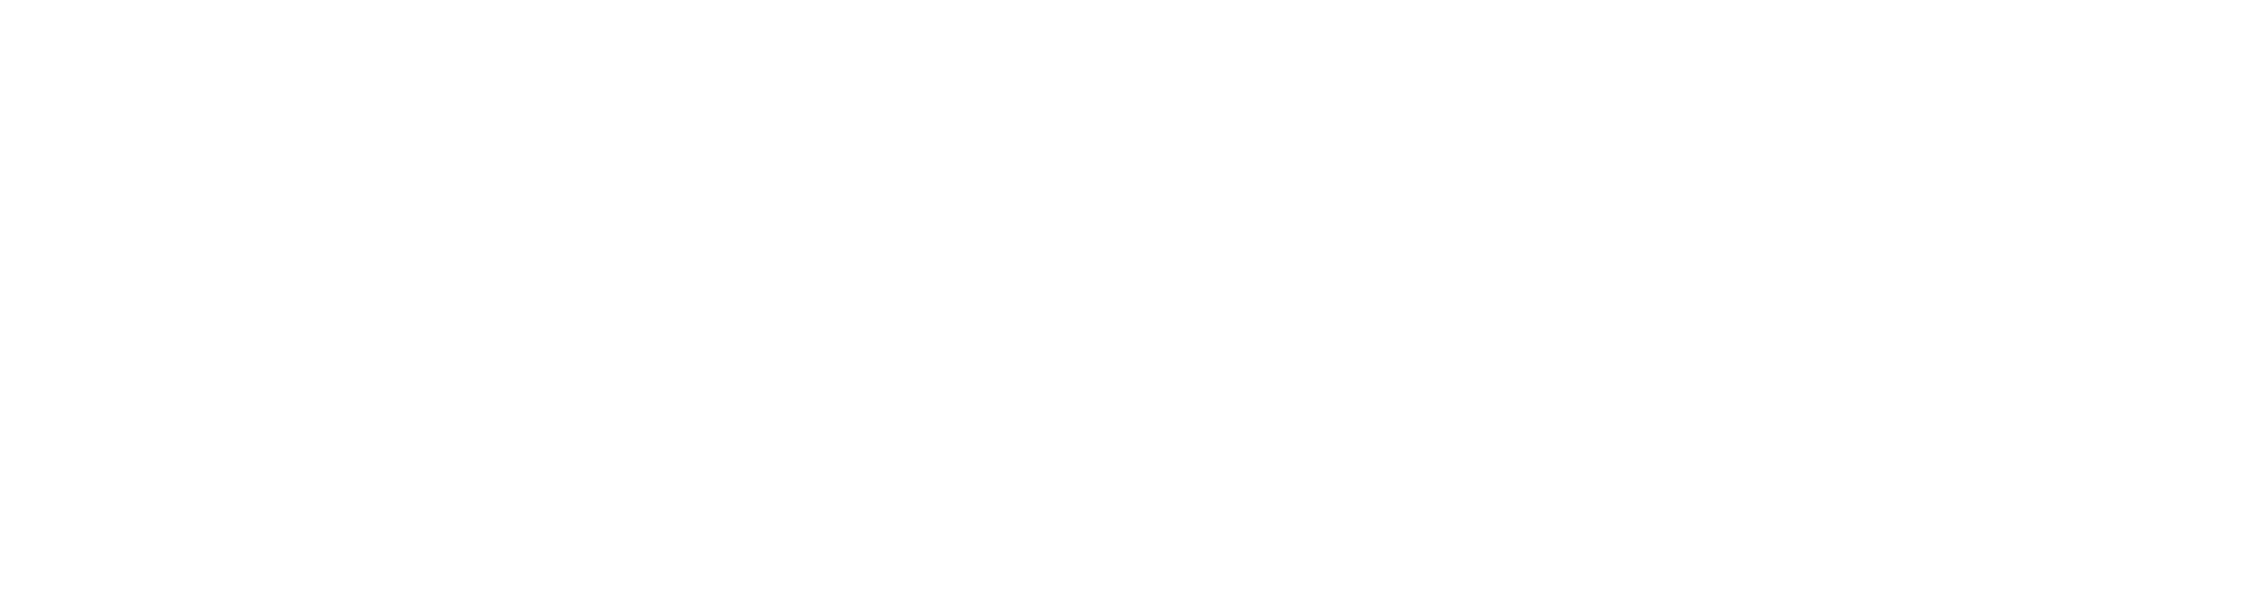 vggz logo